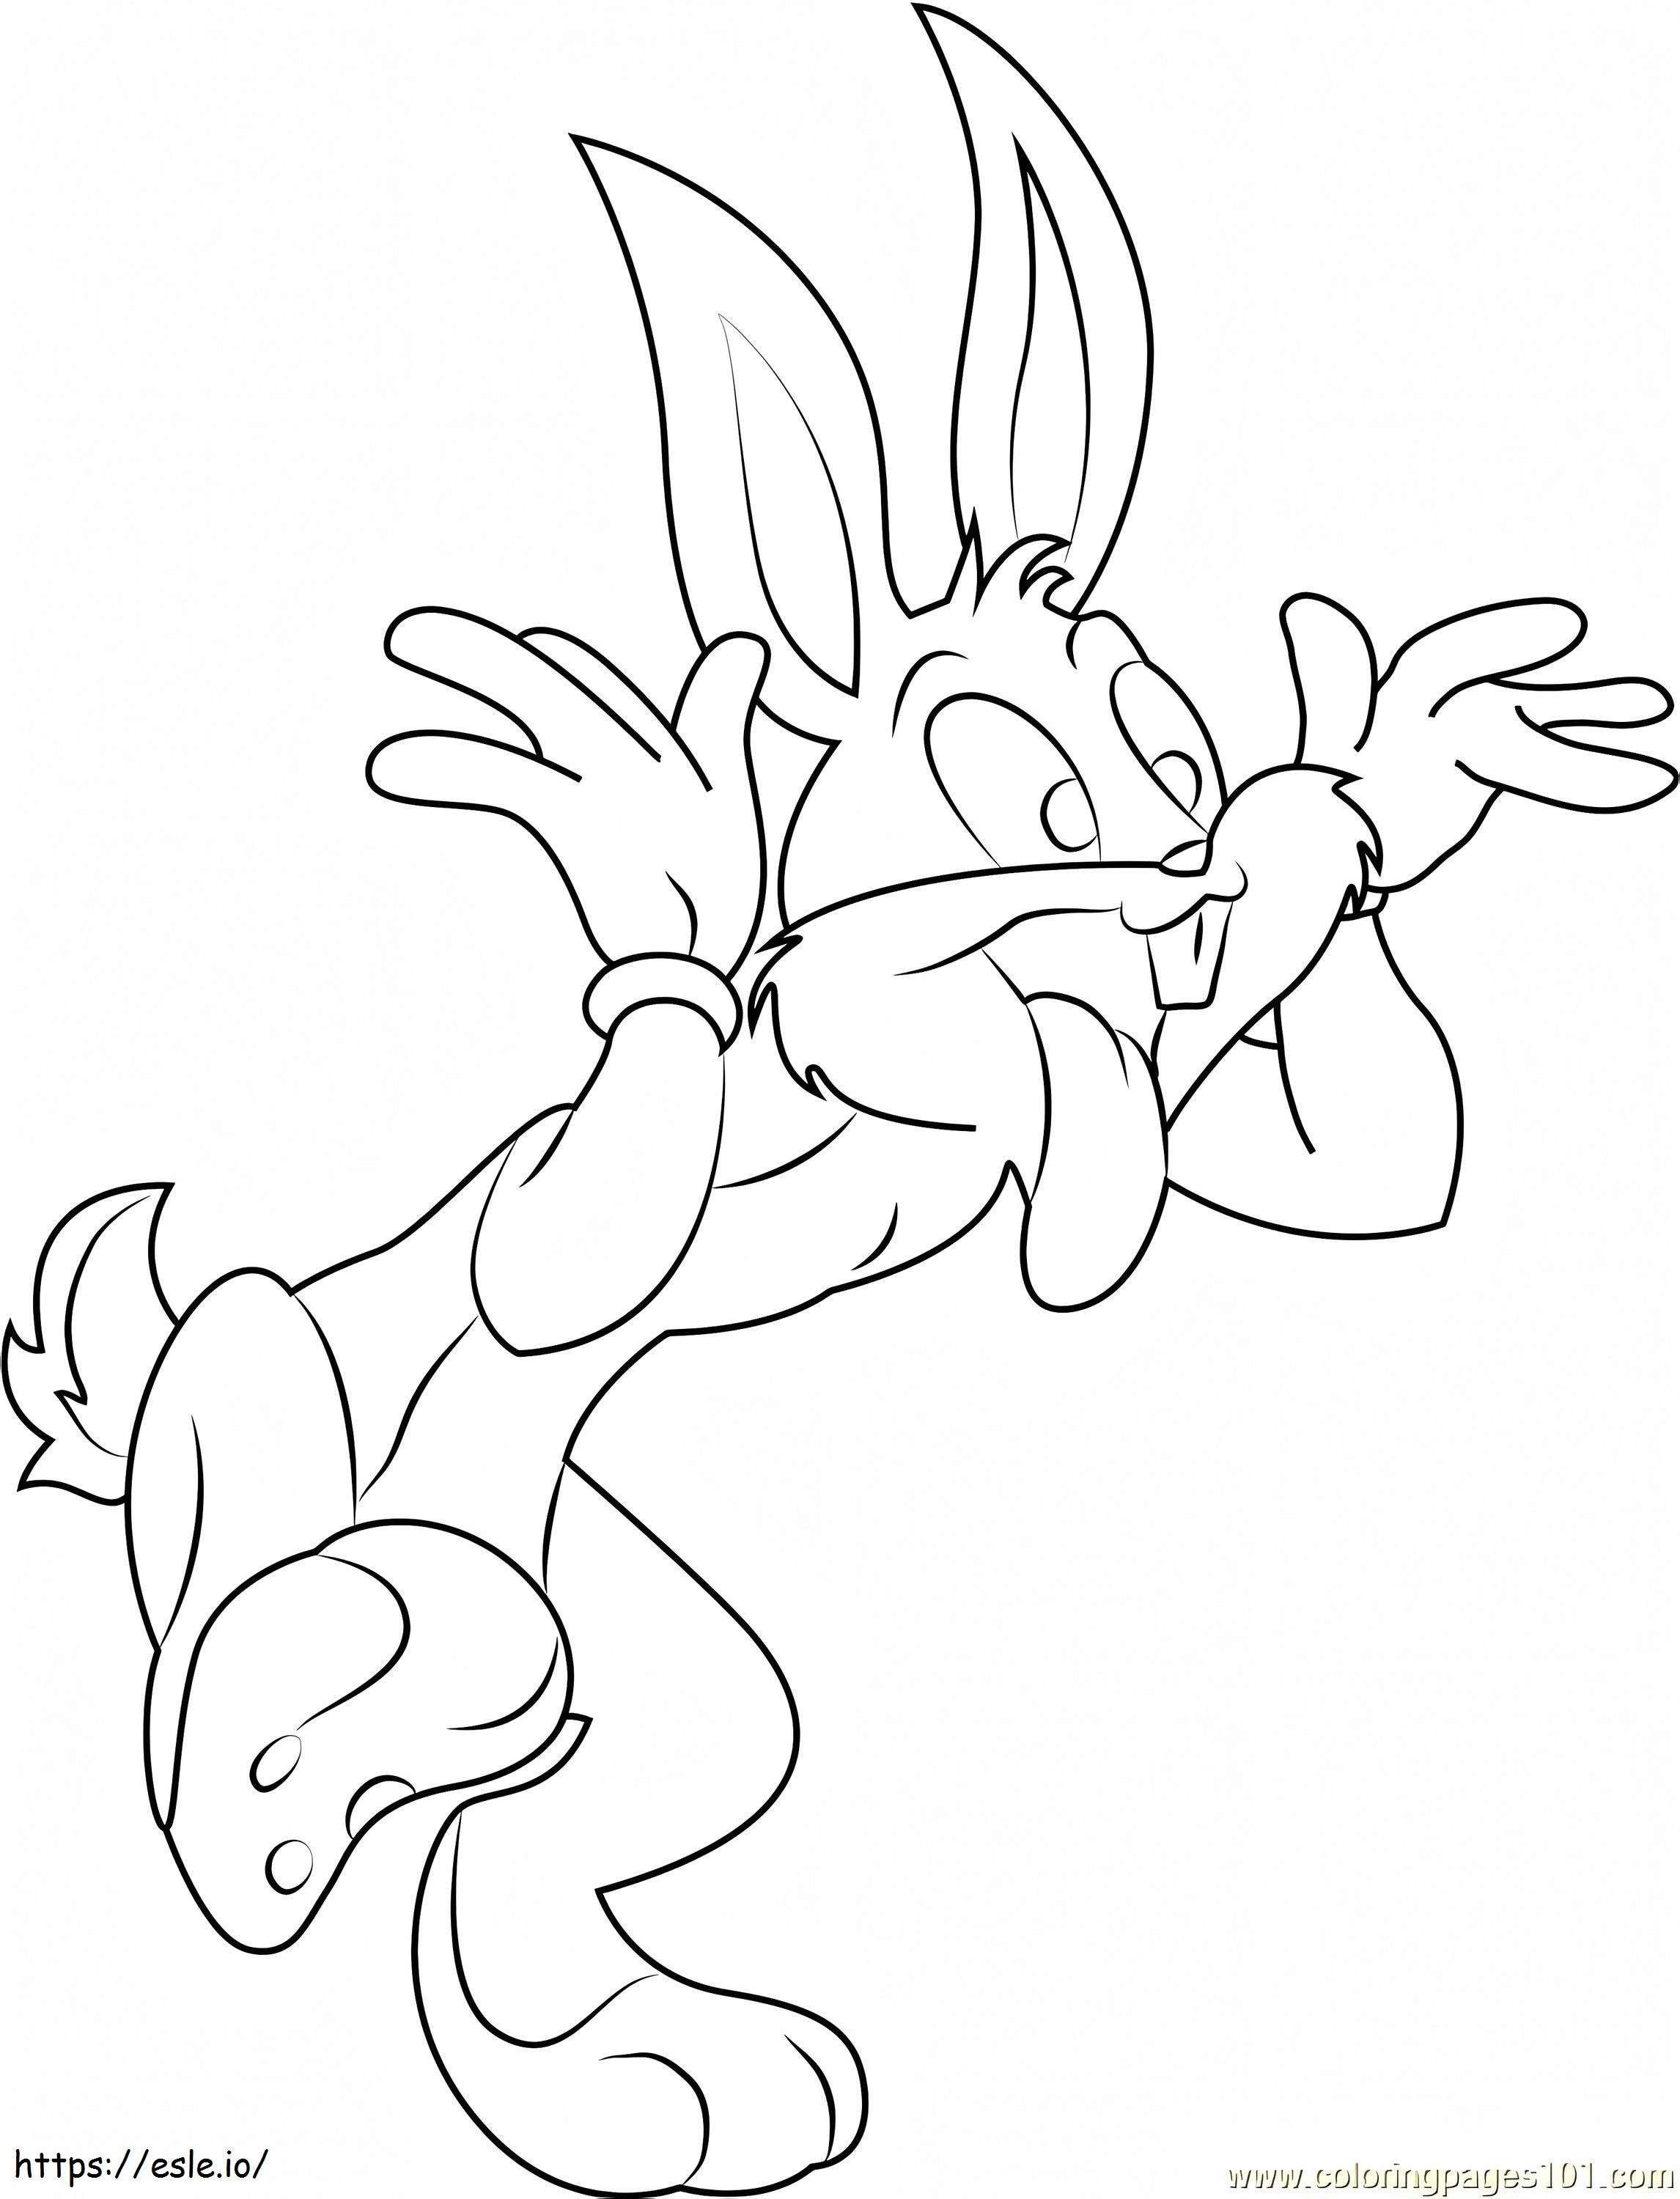 1530324261_Bugs Bunny Tavşan1 boyama